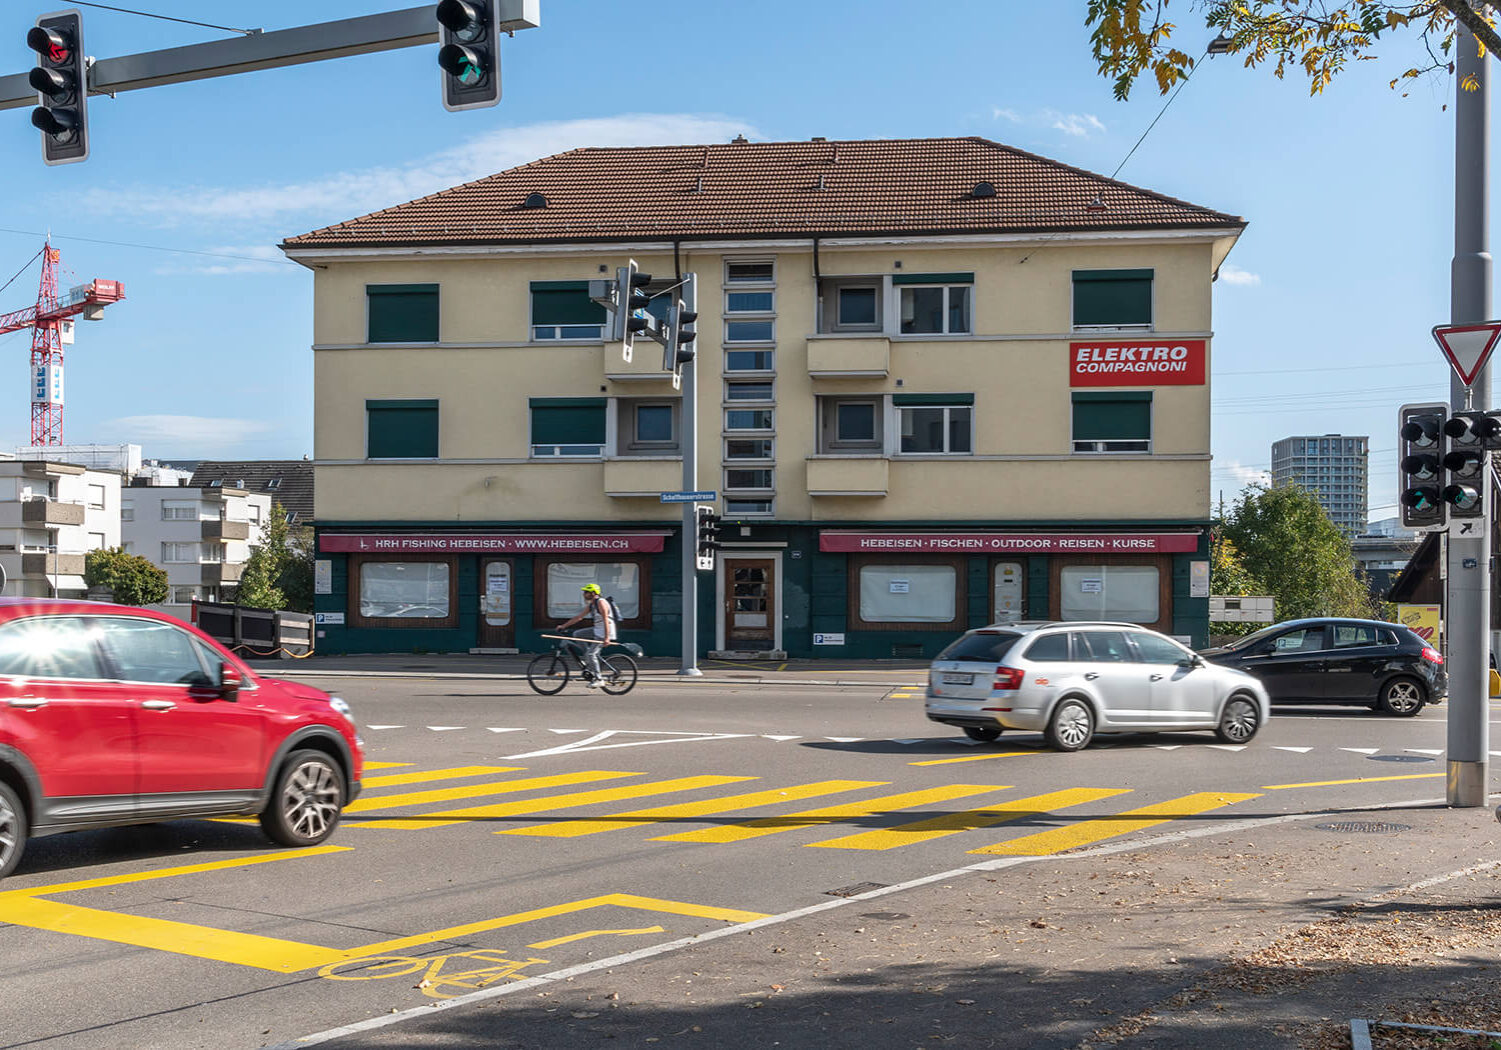 Immobilien Compagnoni - Umbauprojekt in Zürich-Seebach